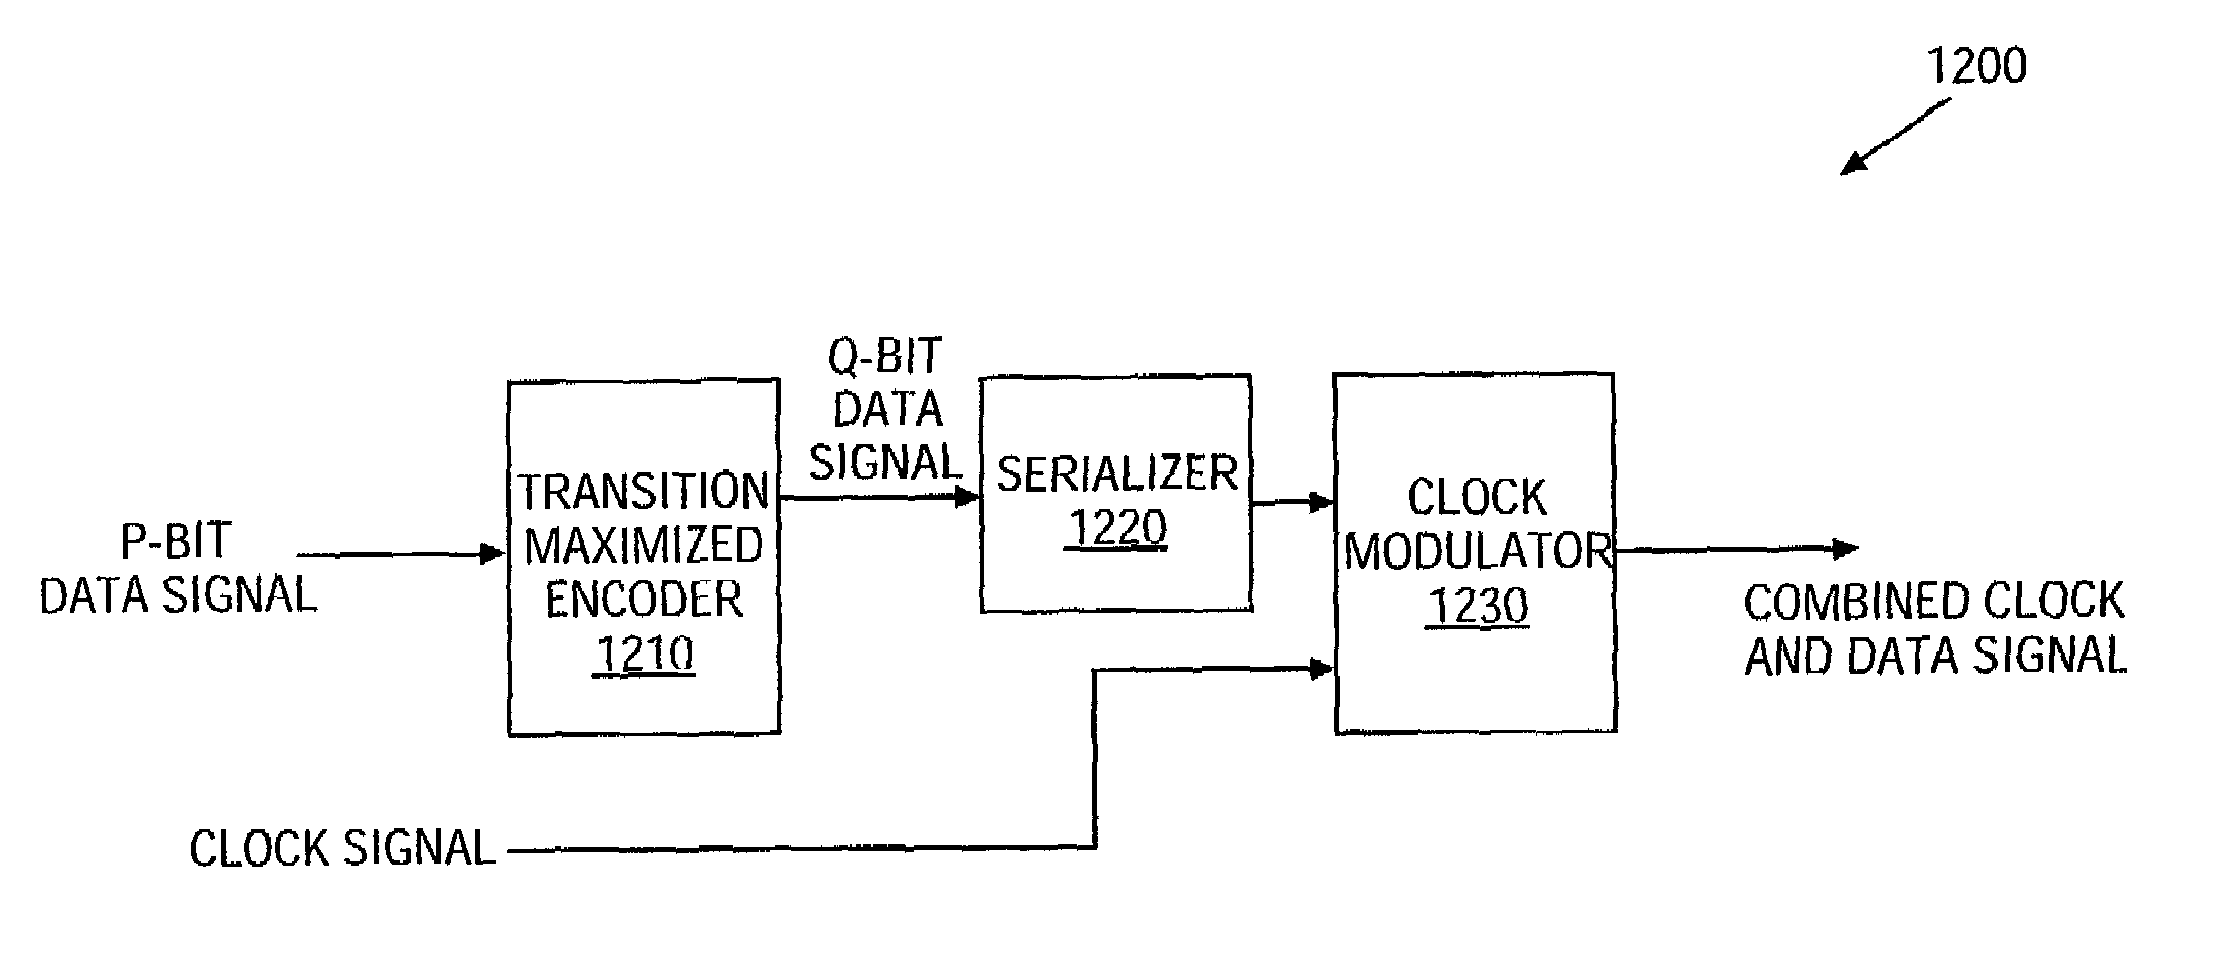 Combining a clock signal and a data signal